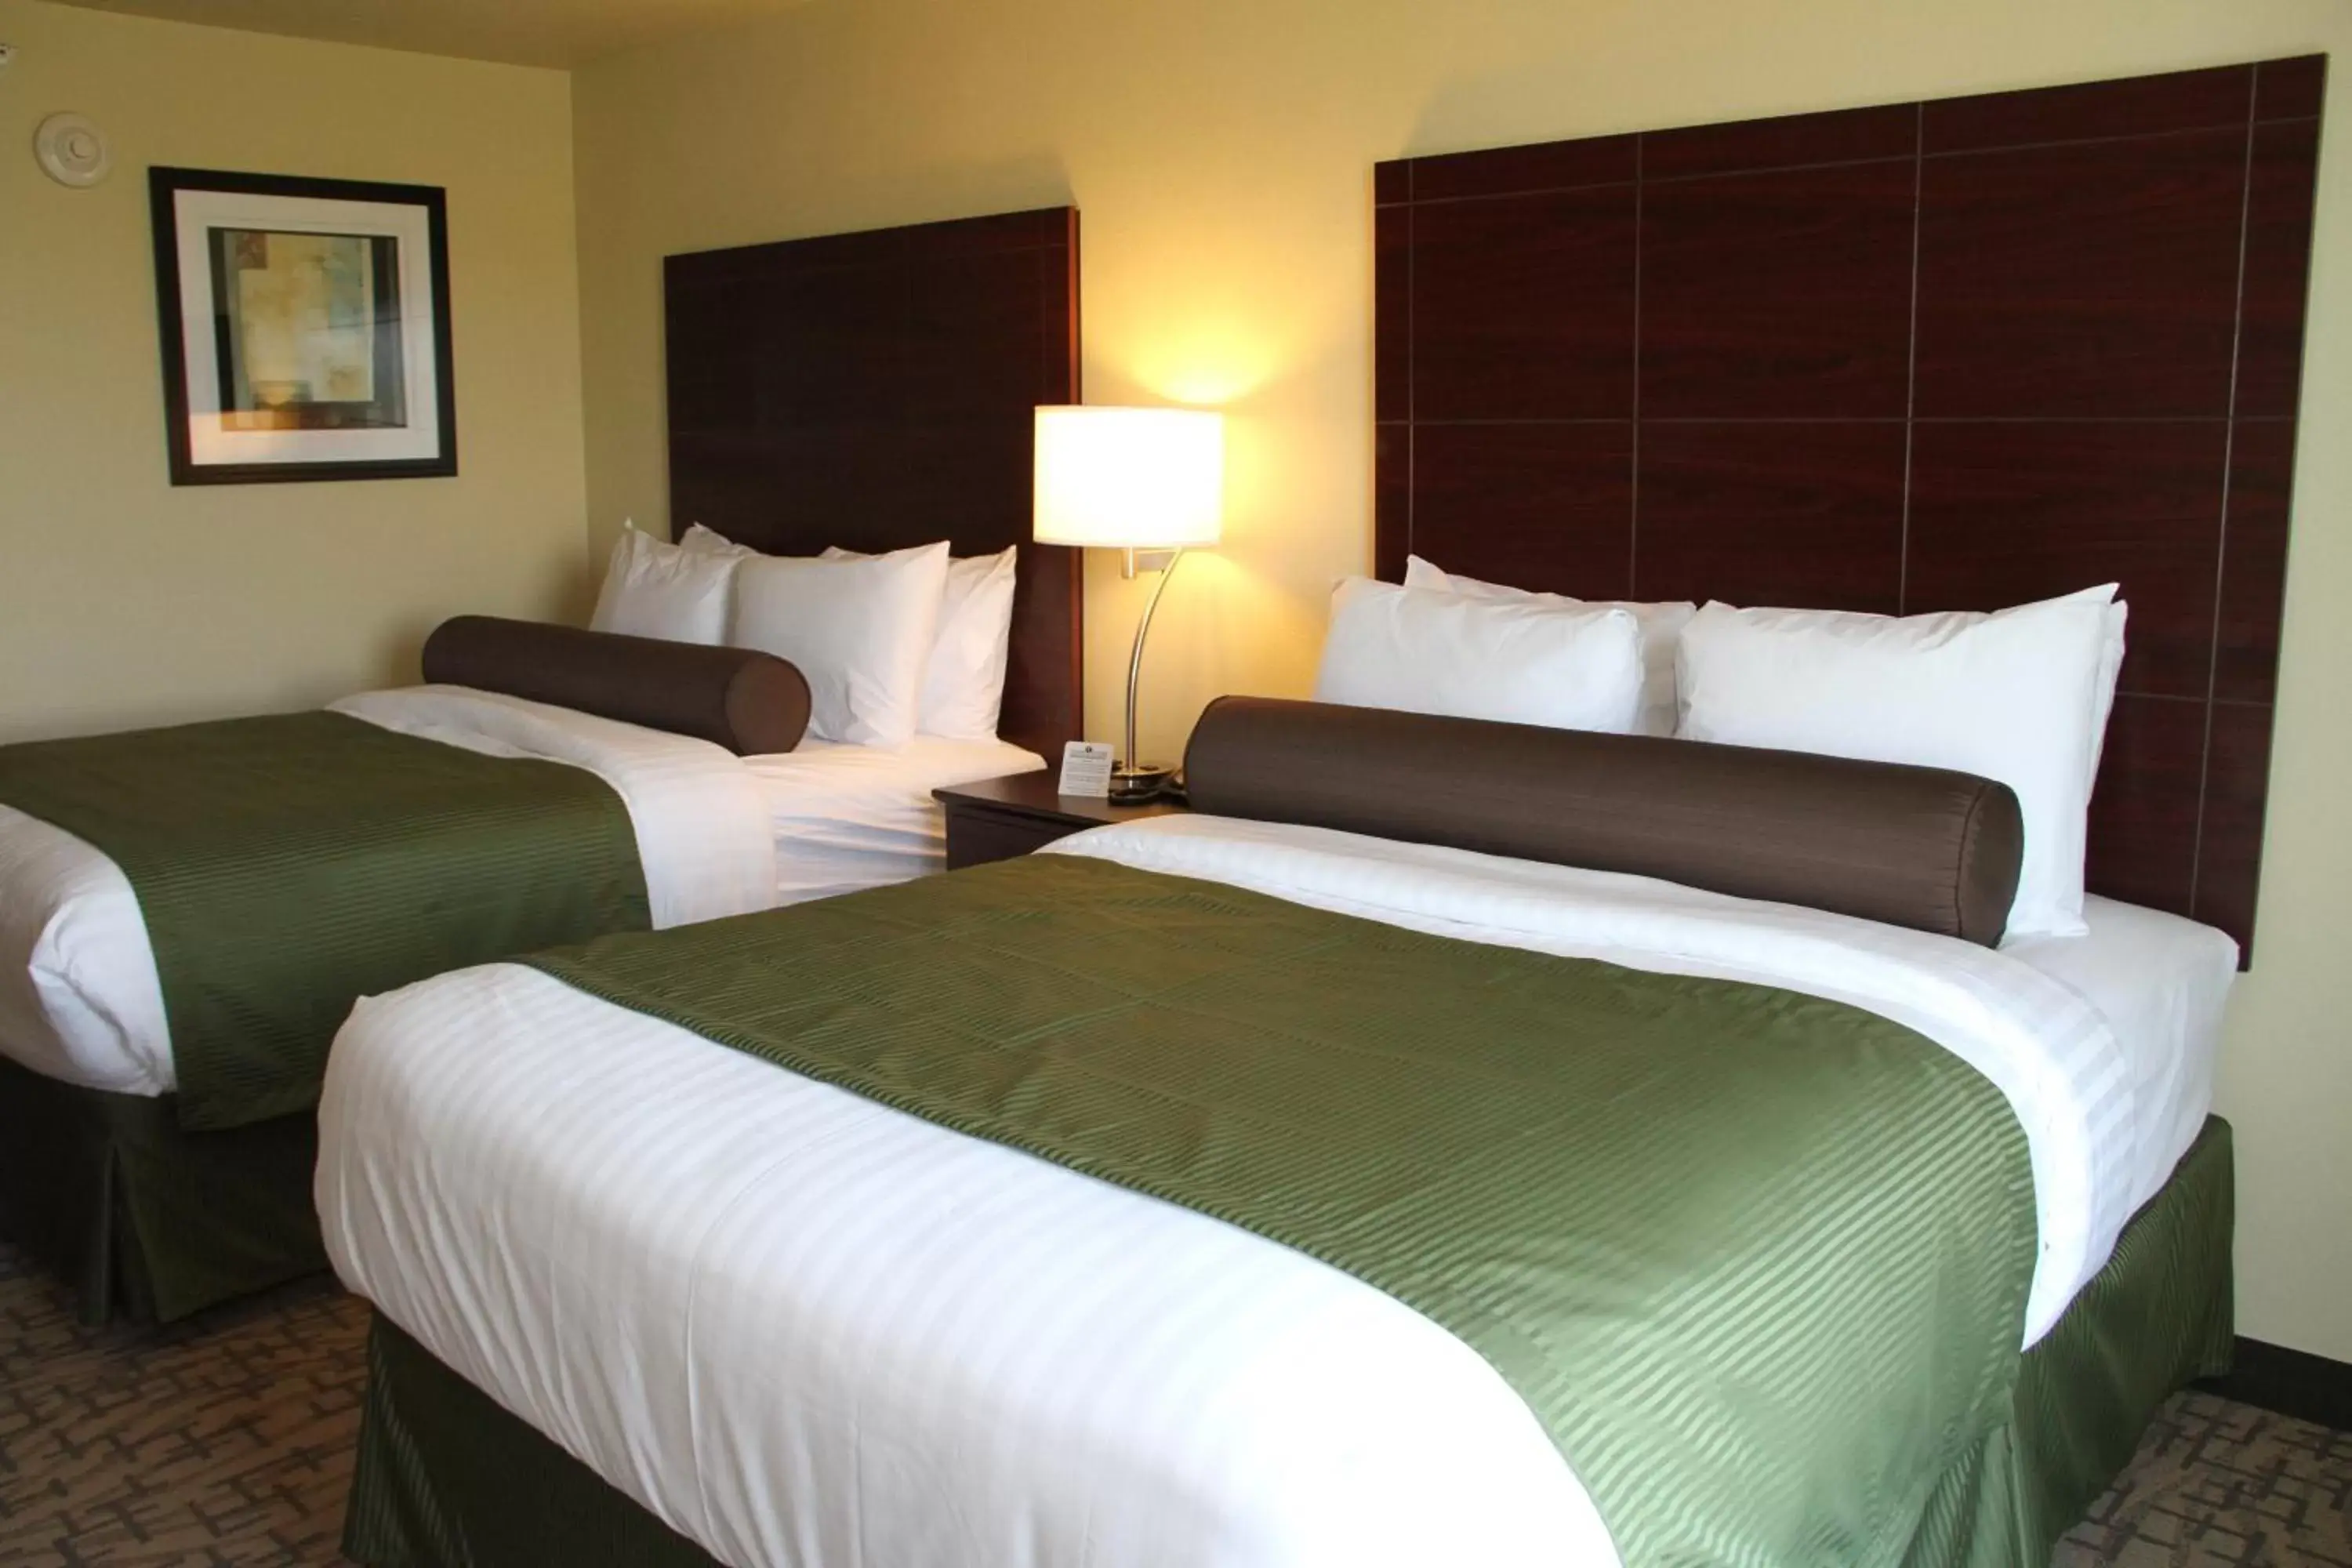 Bedroom, Room Photo in Cobblestone Hotel & Suites - Devils Lake